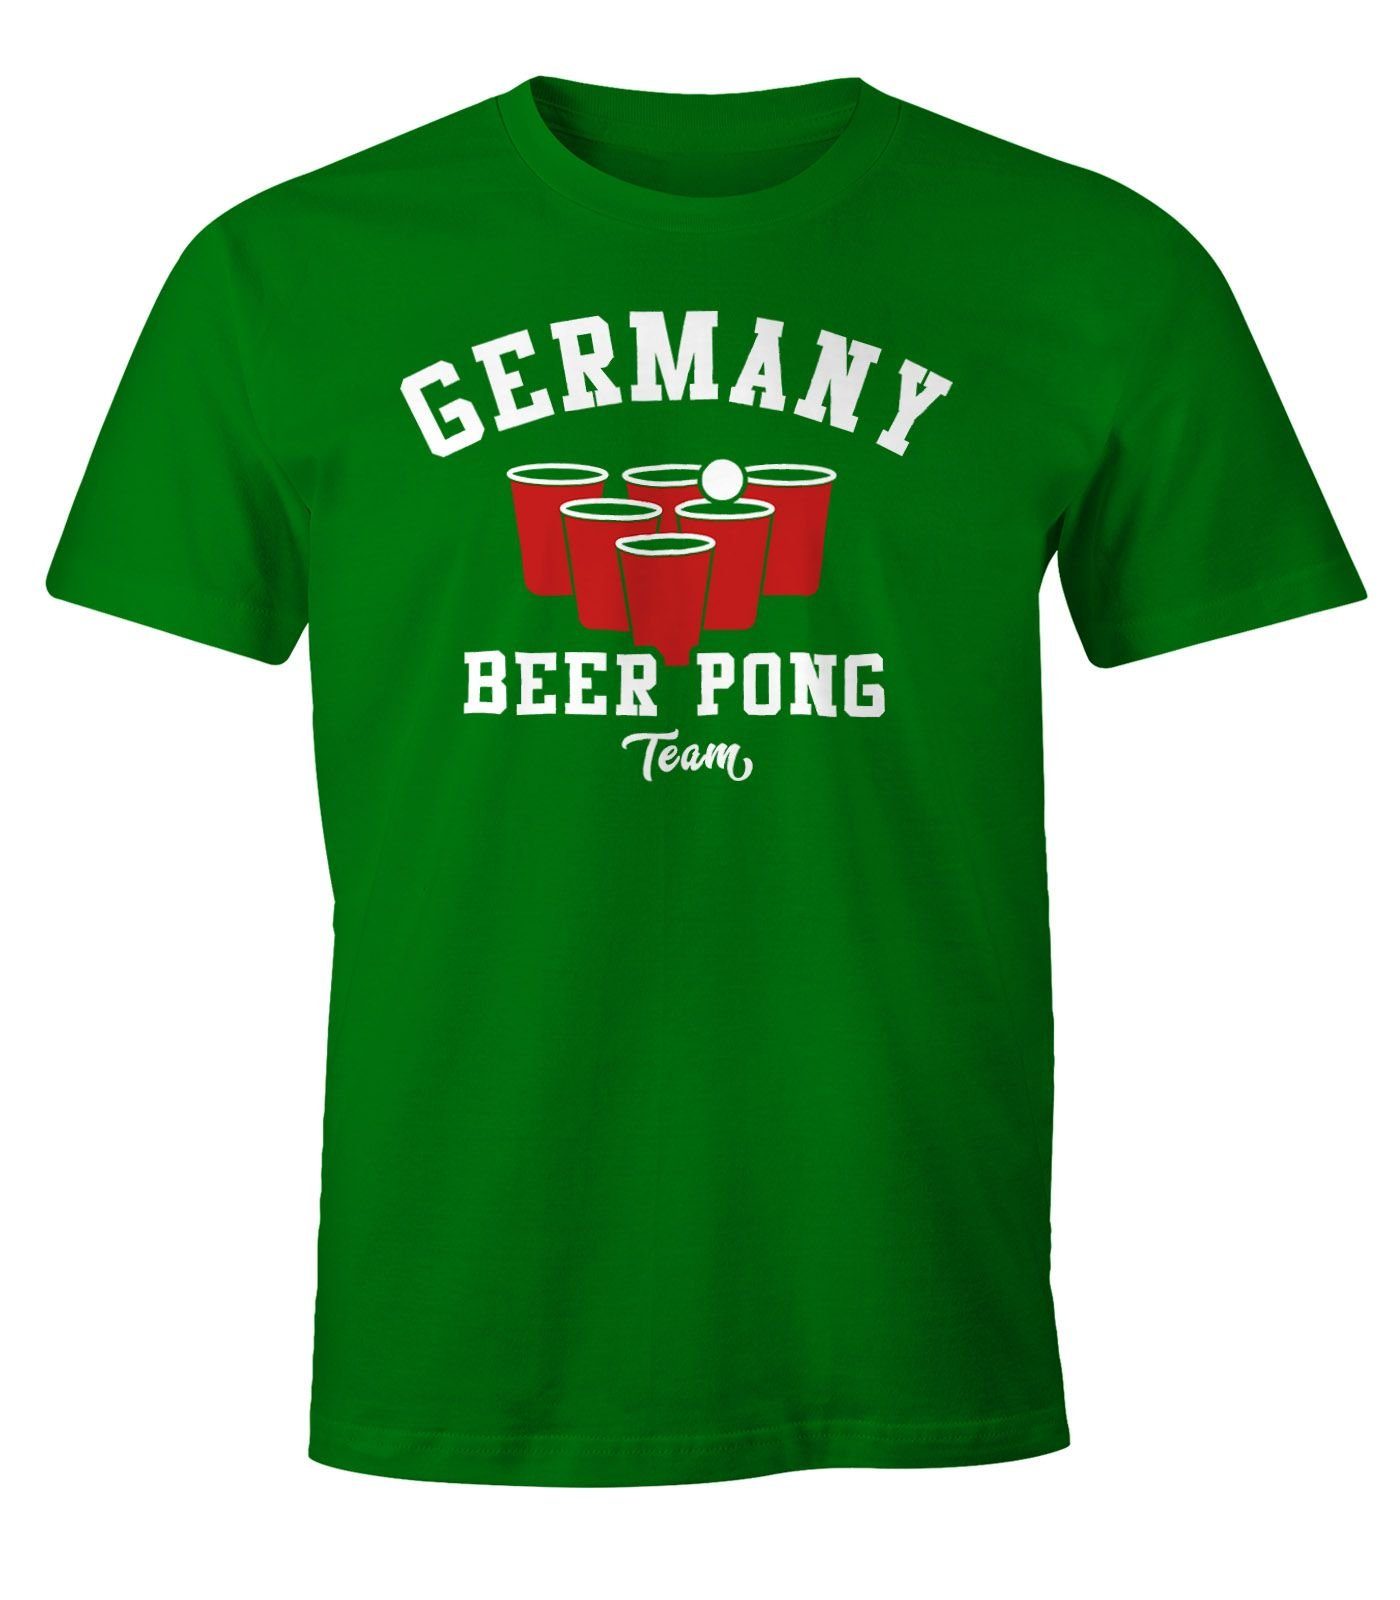 MoonWorks Print-Shirt Herren Team Pong Fun-Shirt grün Germany Print mit Bier Beer Moonworks® T-Shirt